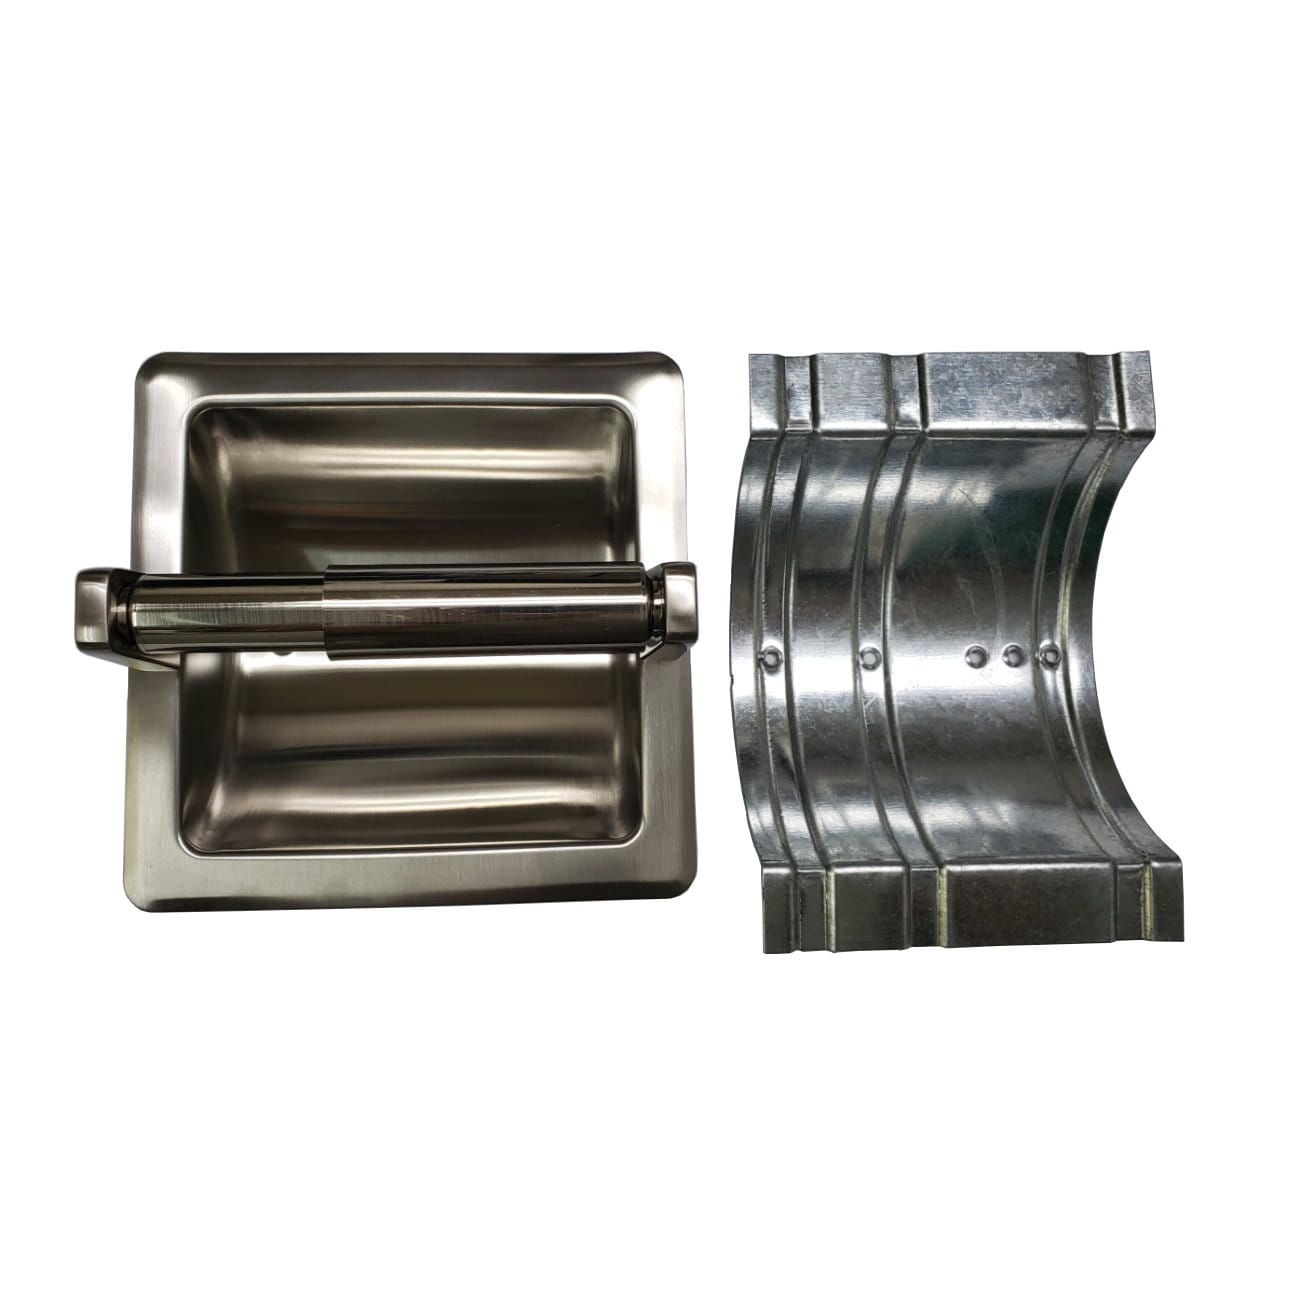 304 Stainless Steel Recessed Toilet Paper Holder (brushed Nickel